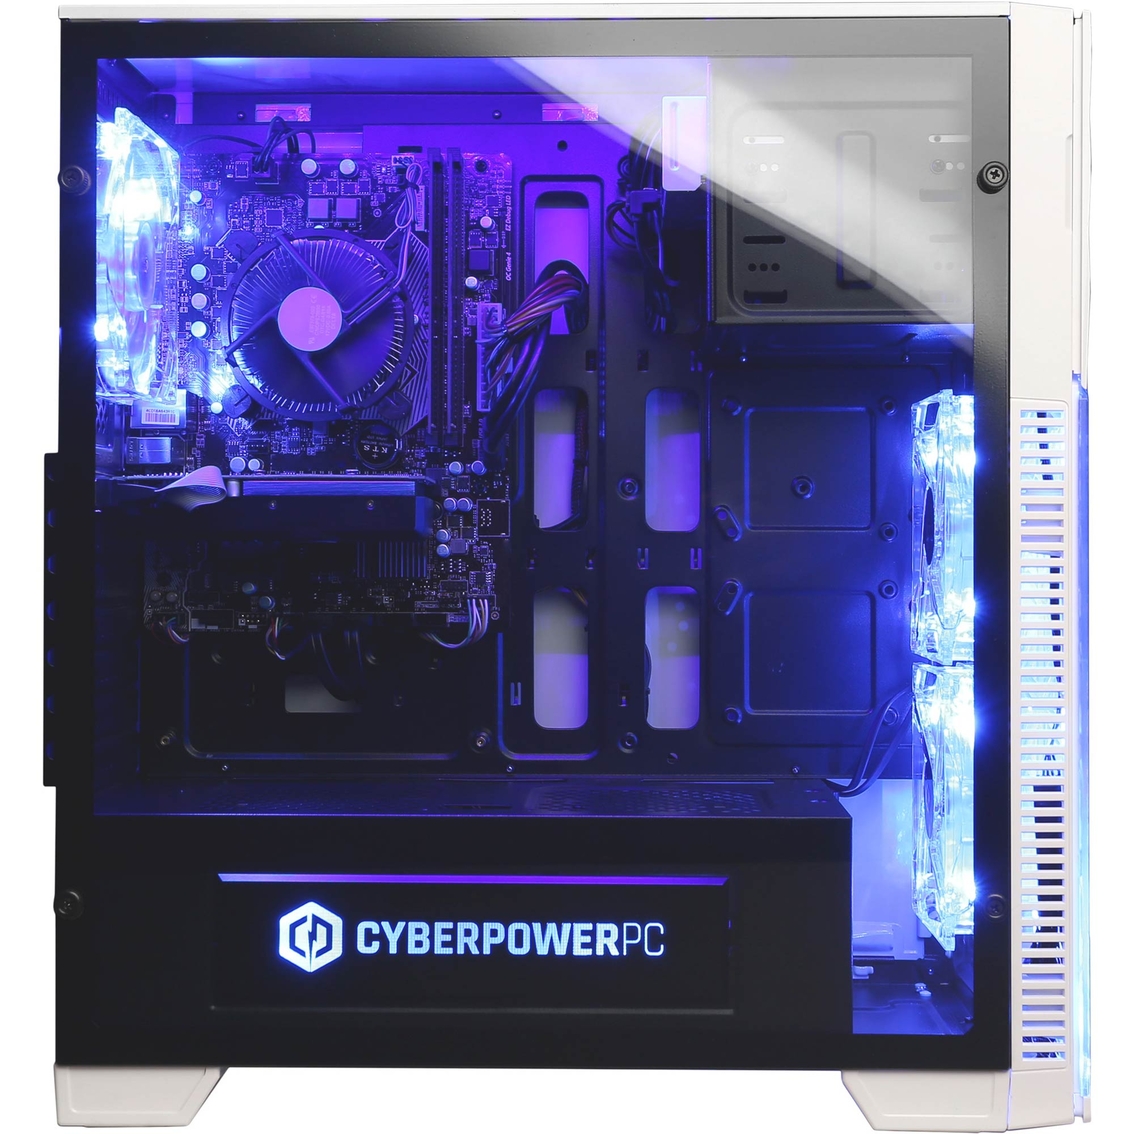 CyberPower PC GMA300 AMD Ryzen 7 3.0GHz 8GB 1TB HDD NVIDIA Windows 10 Home Desktop - Image 3 of 4